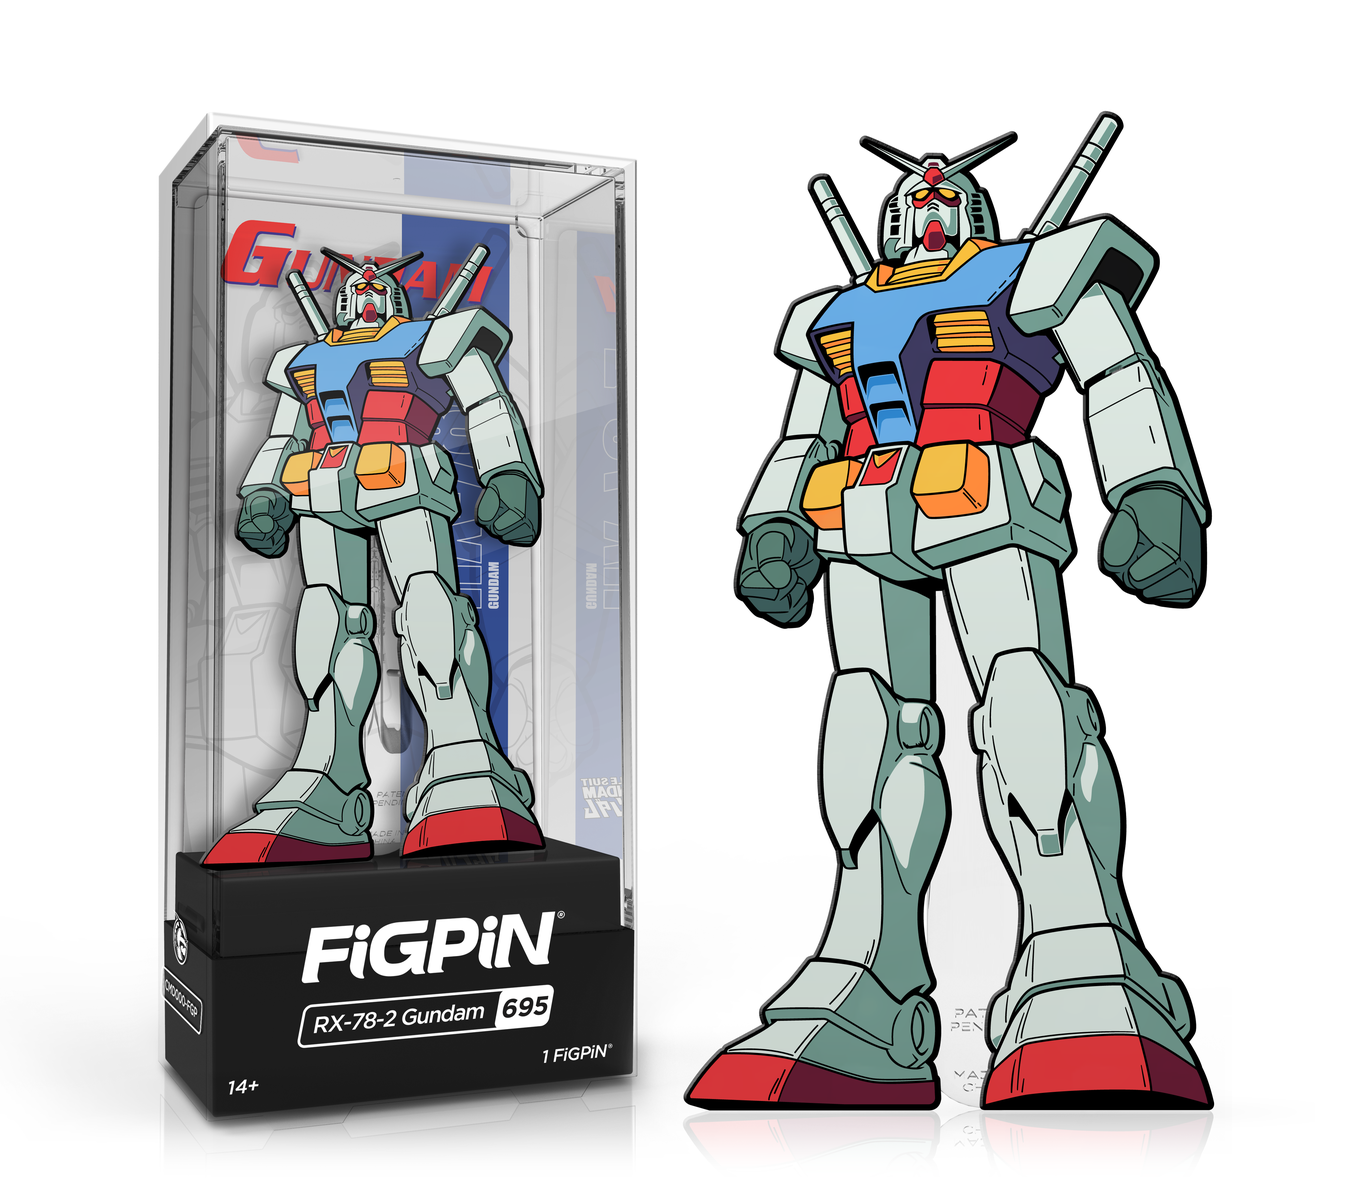 RX-78-2 Gundam (695)